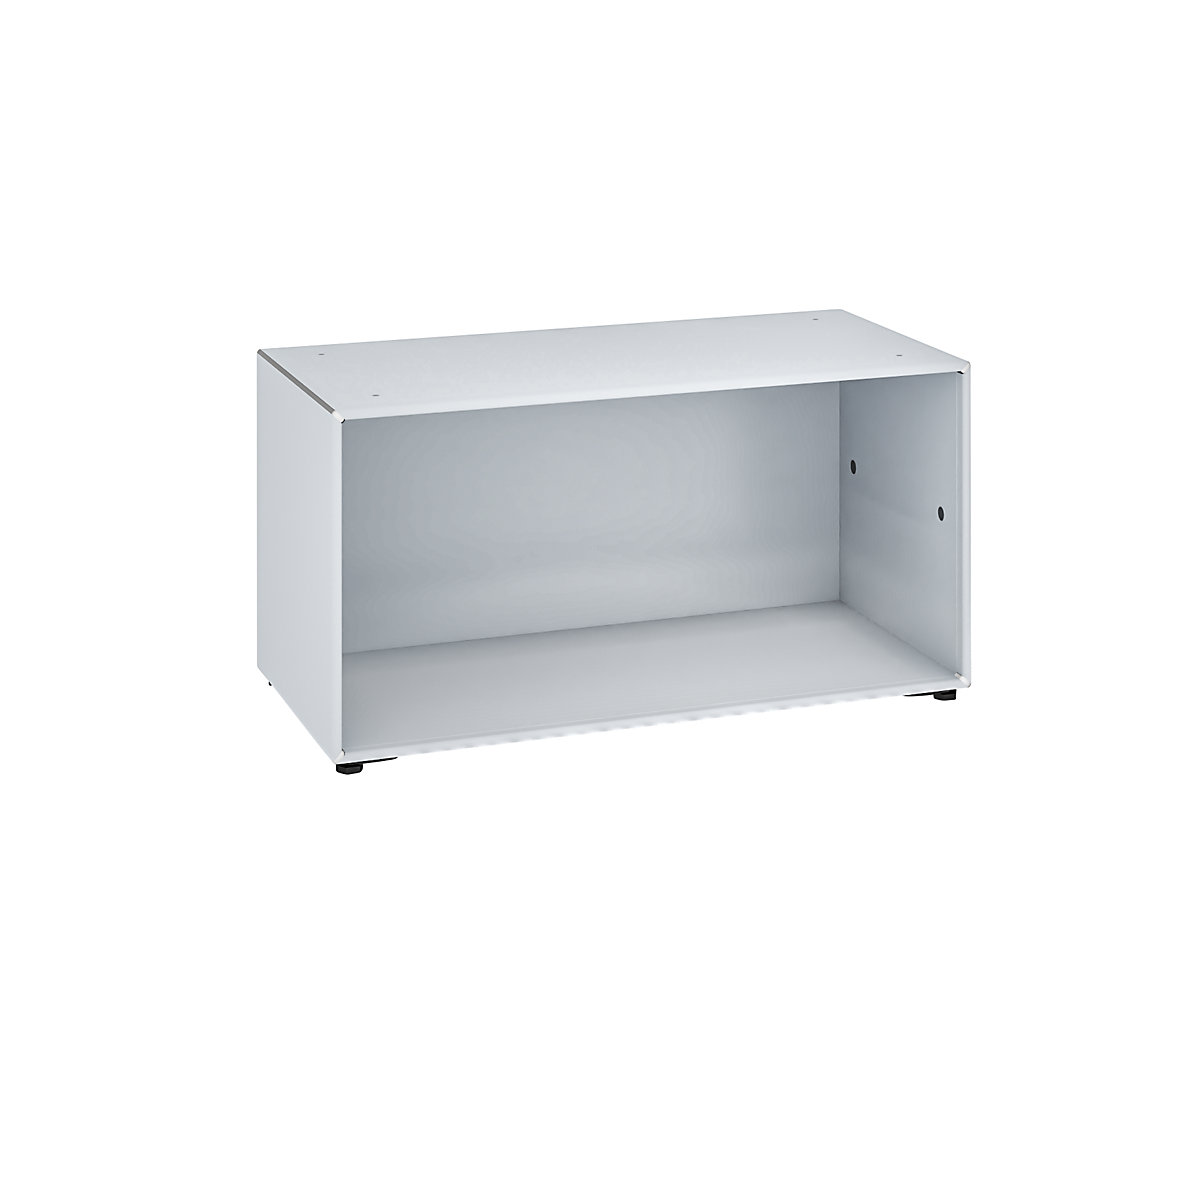 Compartimento individual – mauser, sobre tacos de ajuste, anchura 770 mm, aluminio blanco-5